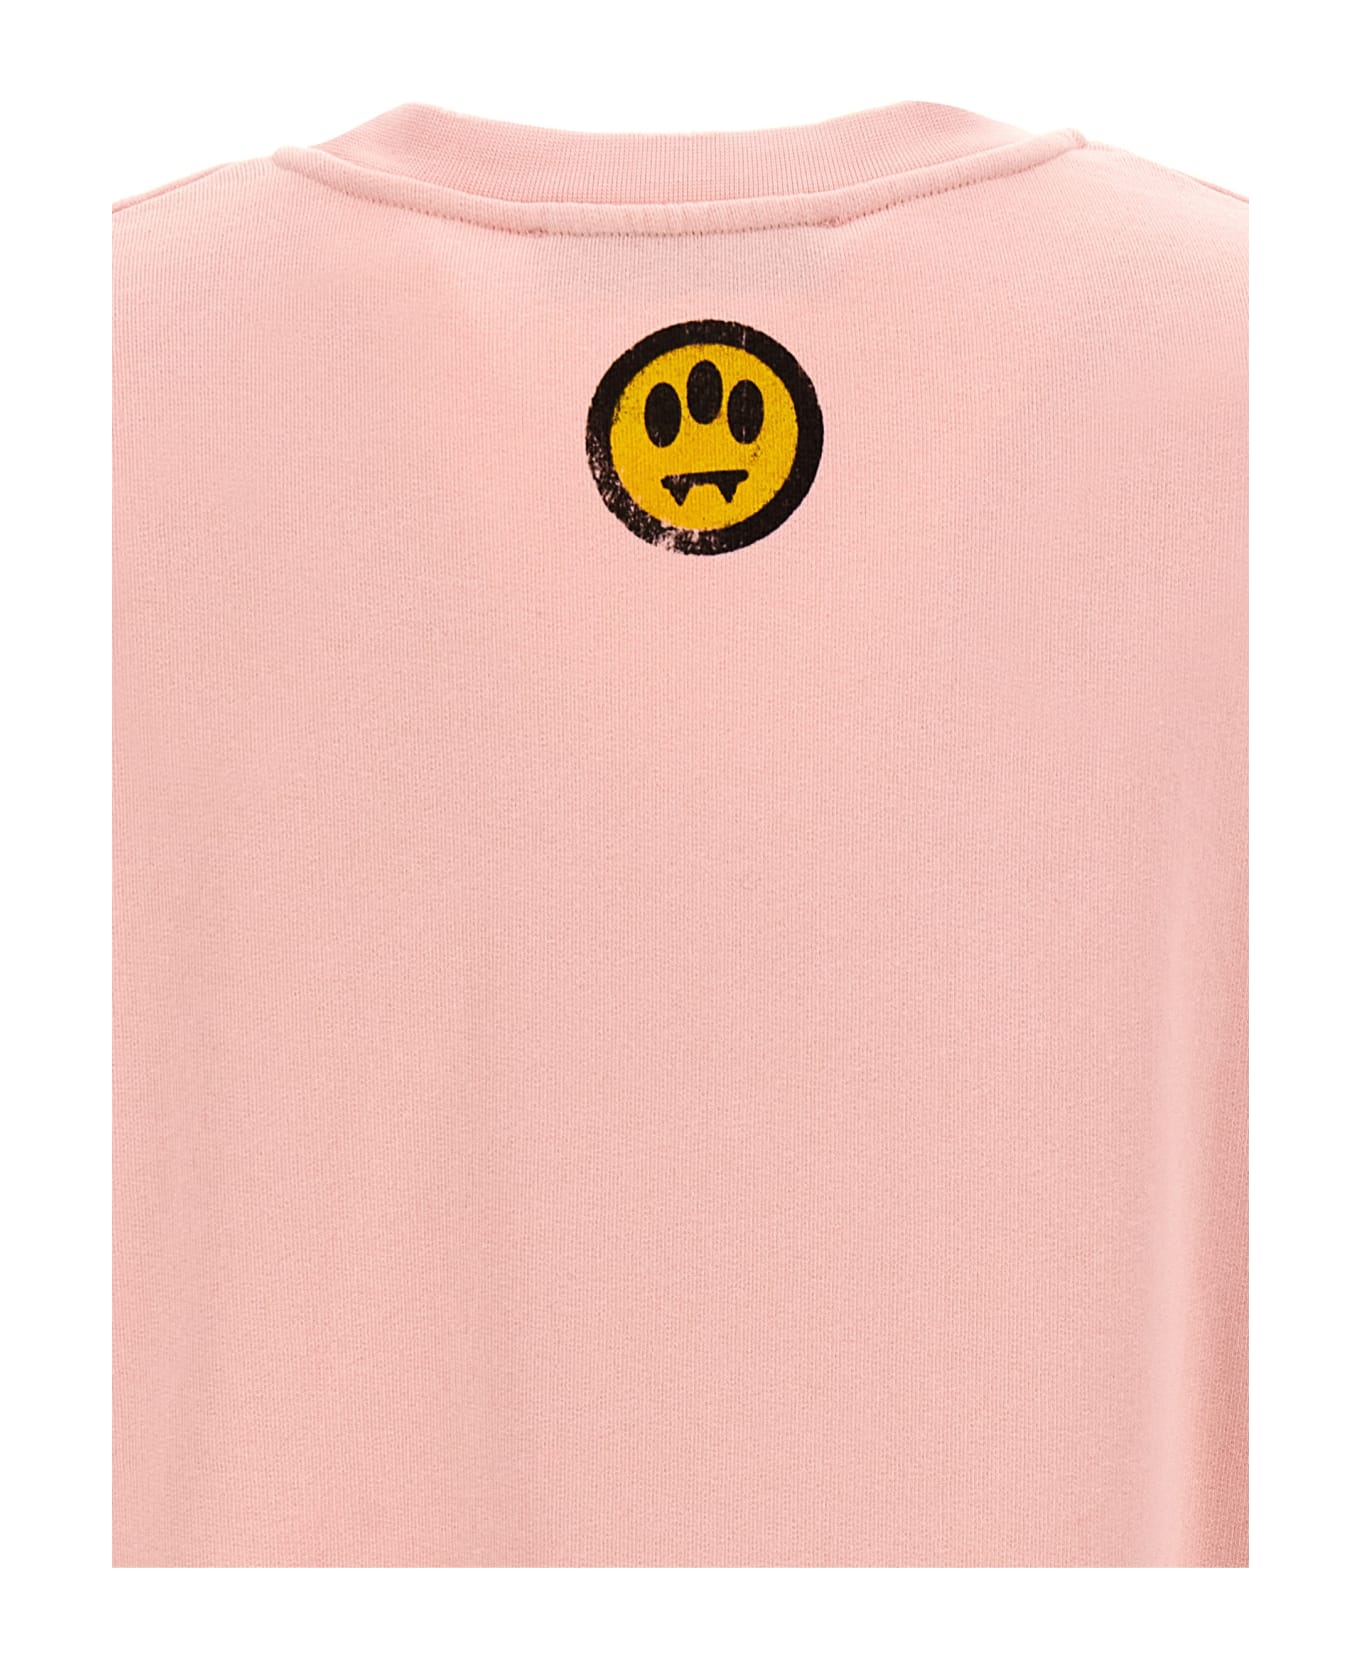 Barrow Logo Print Sweatshirt - Pink フリース